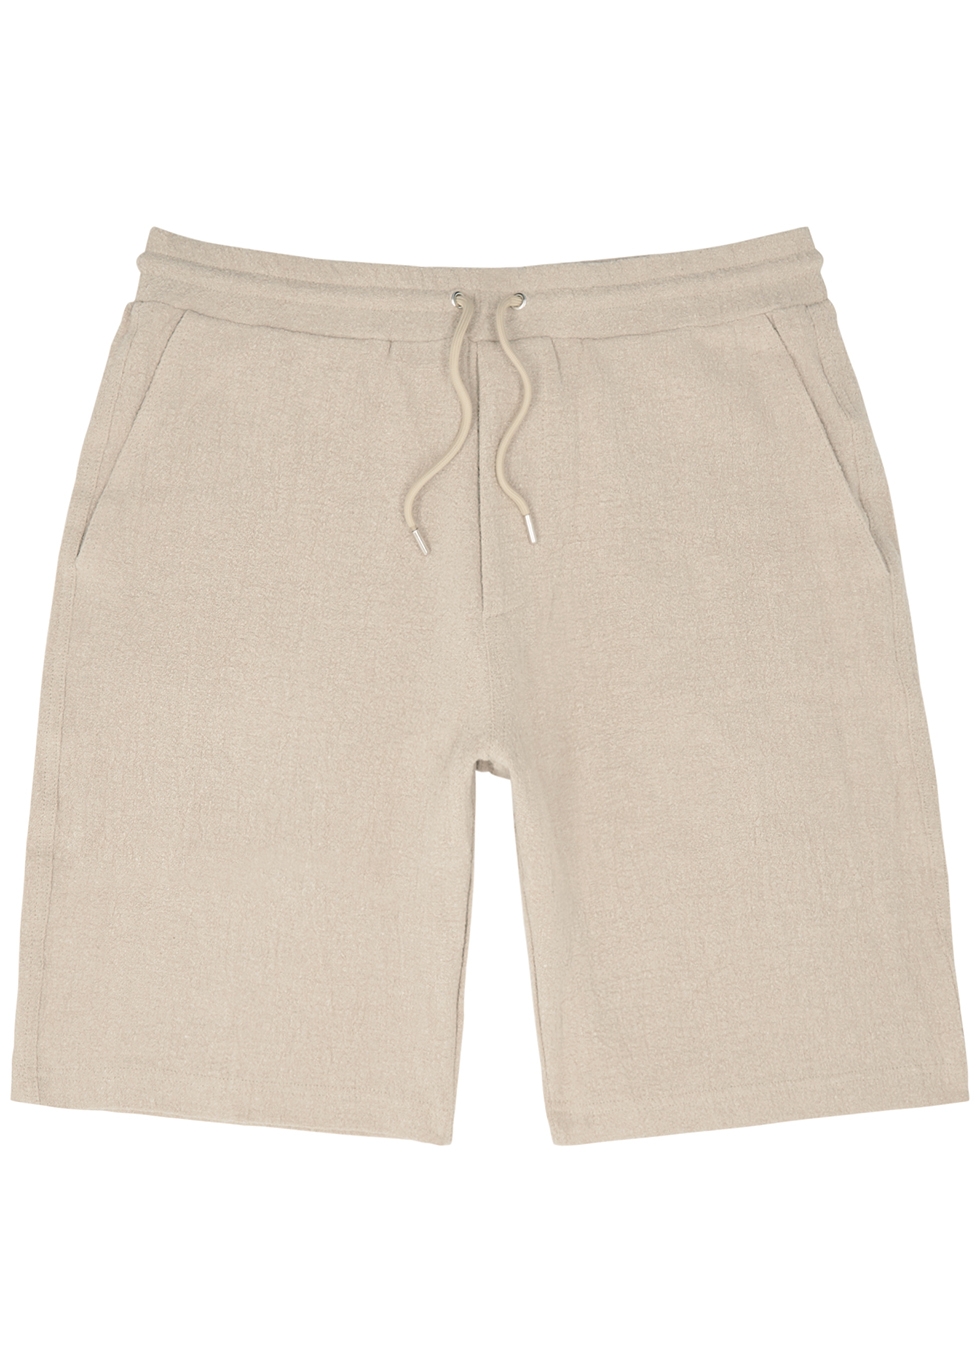 NN07 Jerry linen shorts - Harvey Nichols